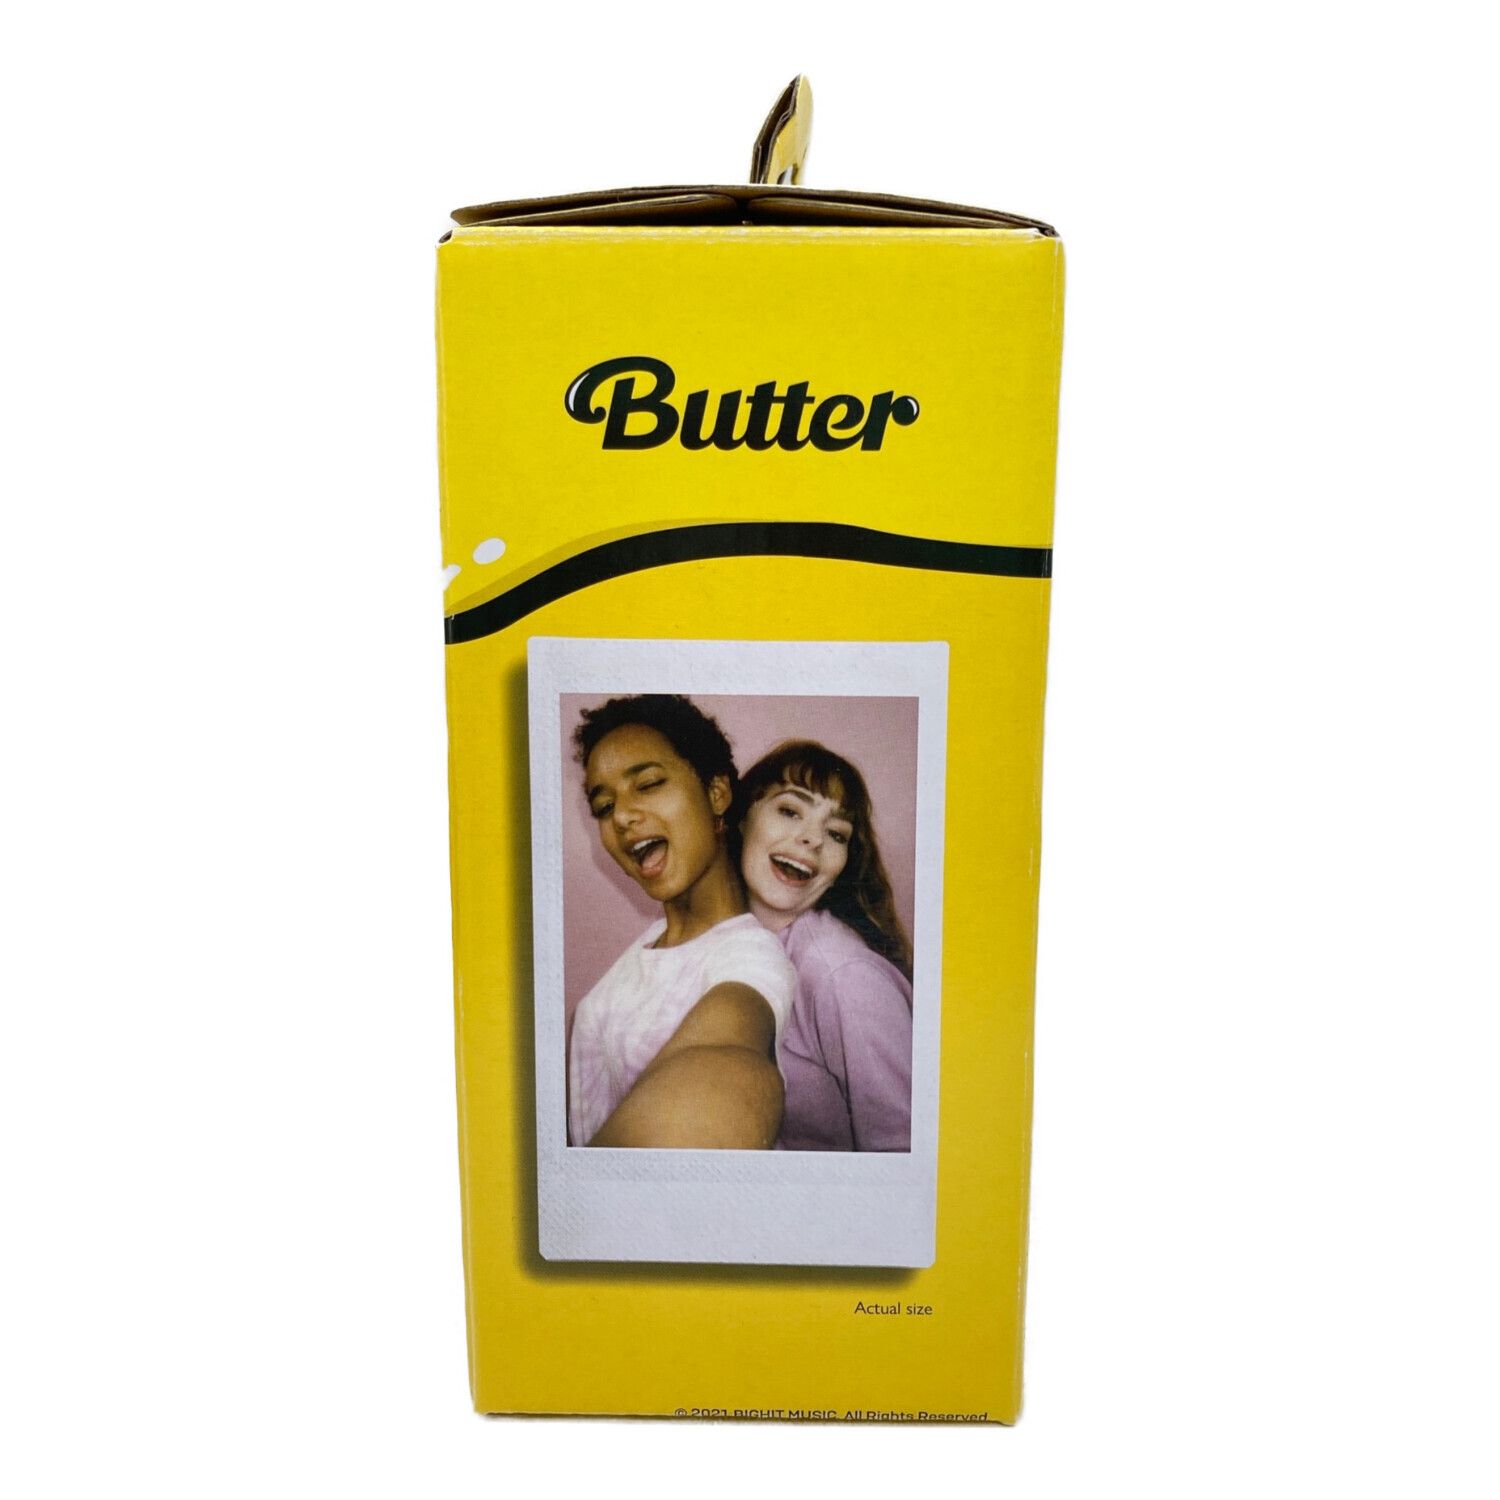 FUJIFILM (フジフィルム) instax mini11 Butter BTS Butterコラボ